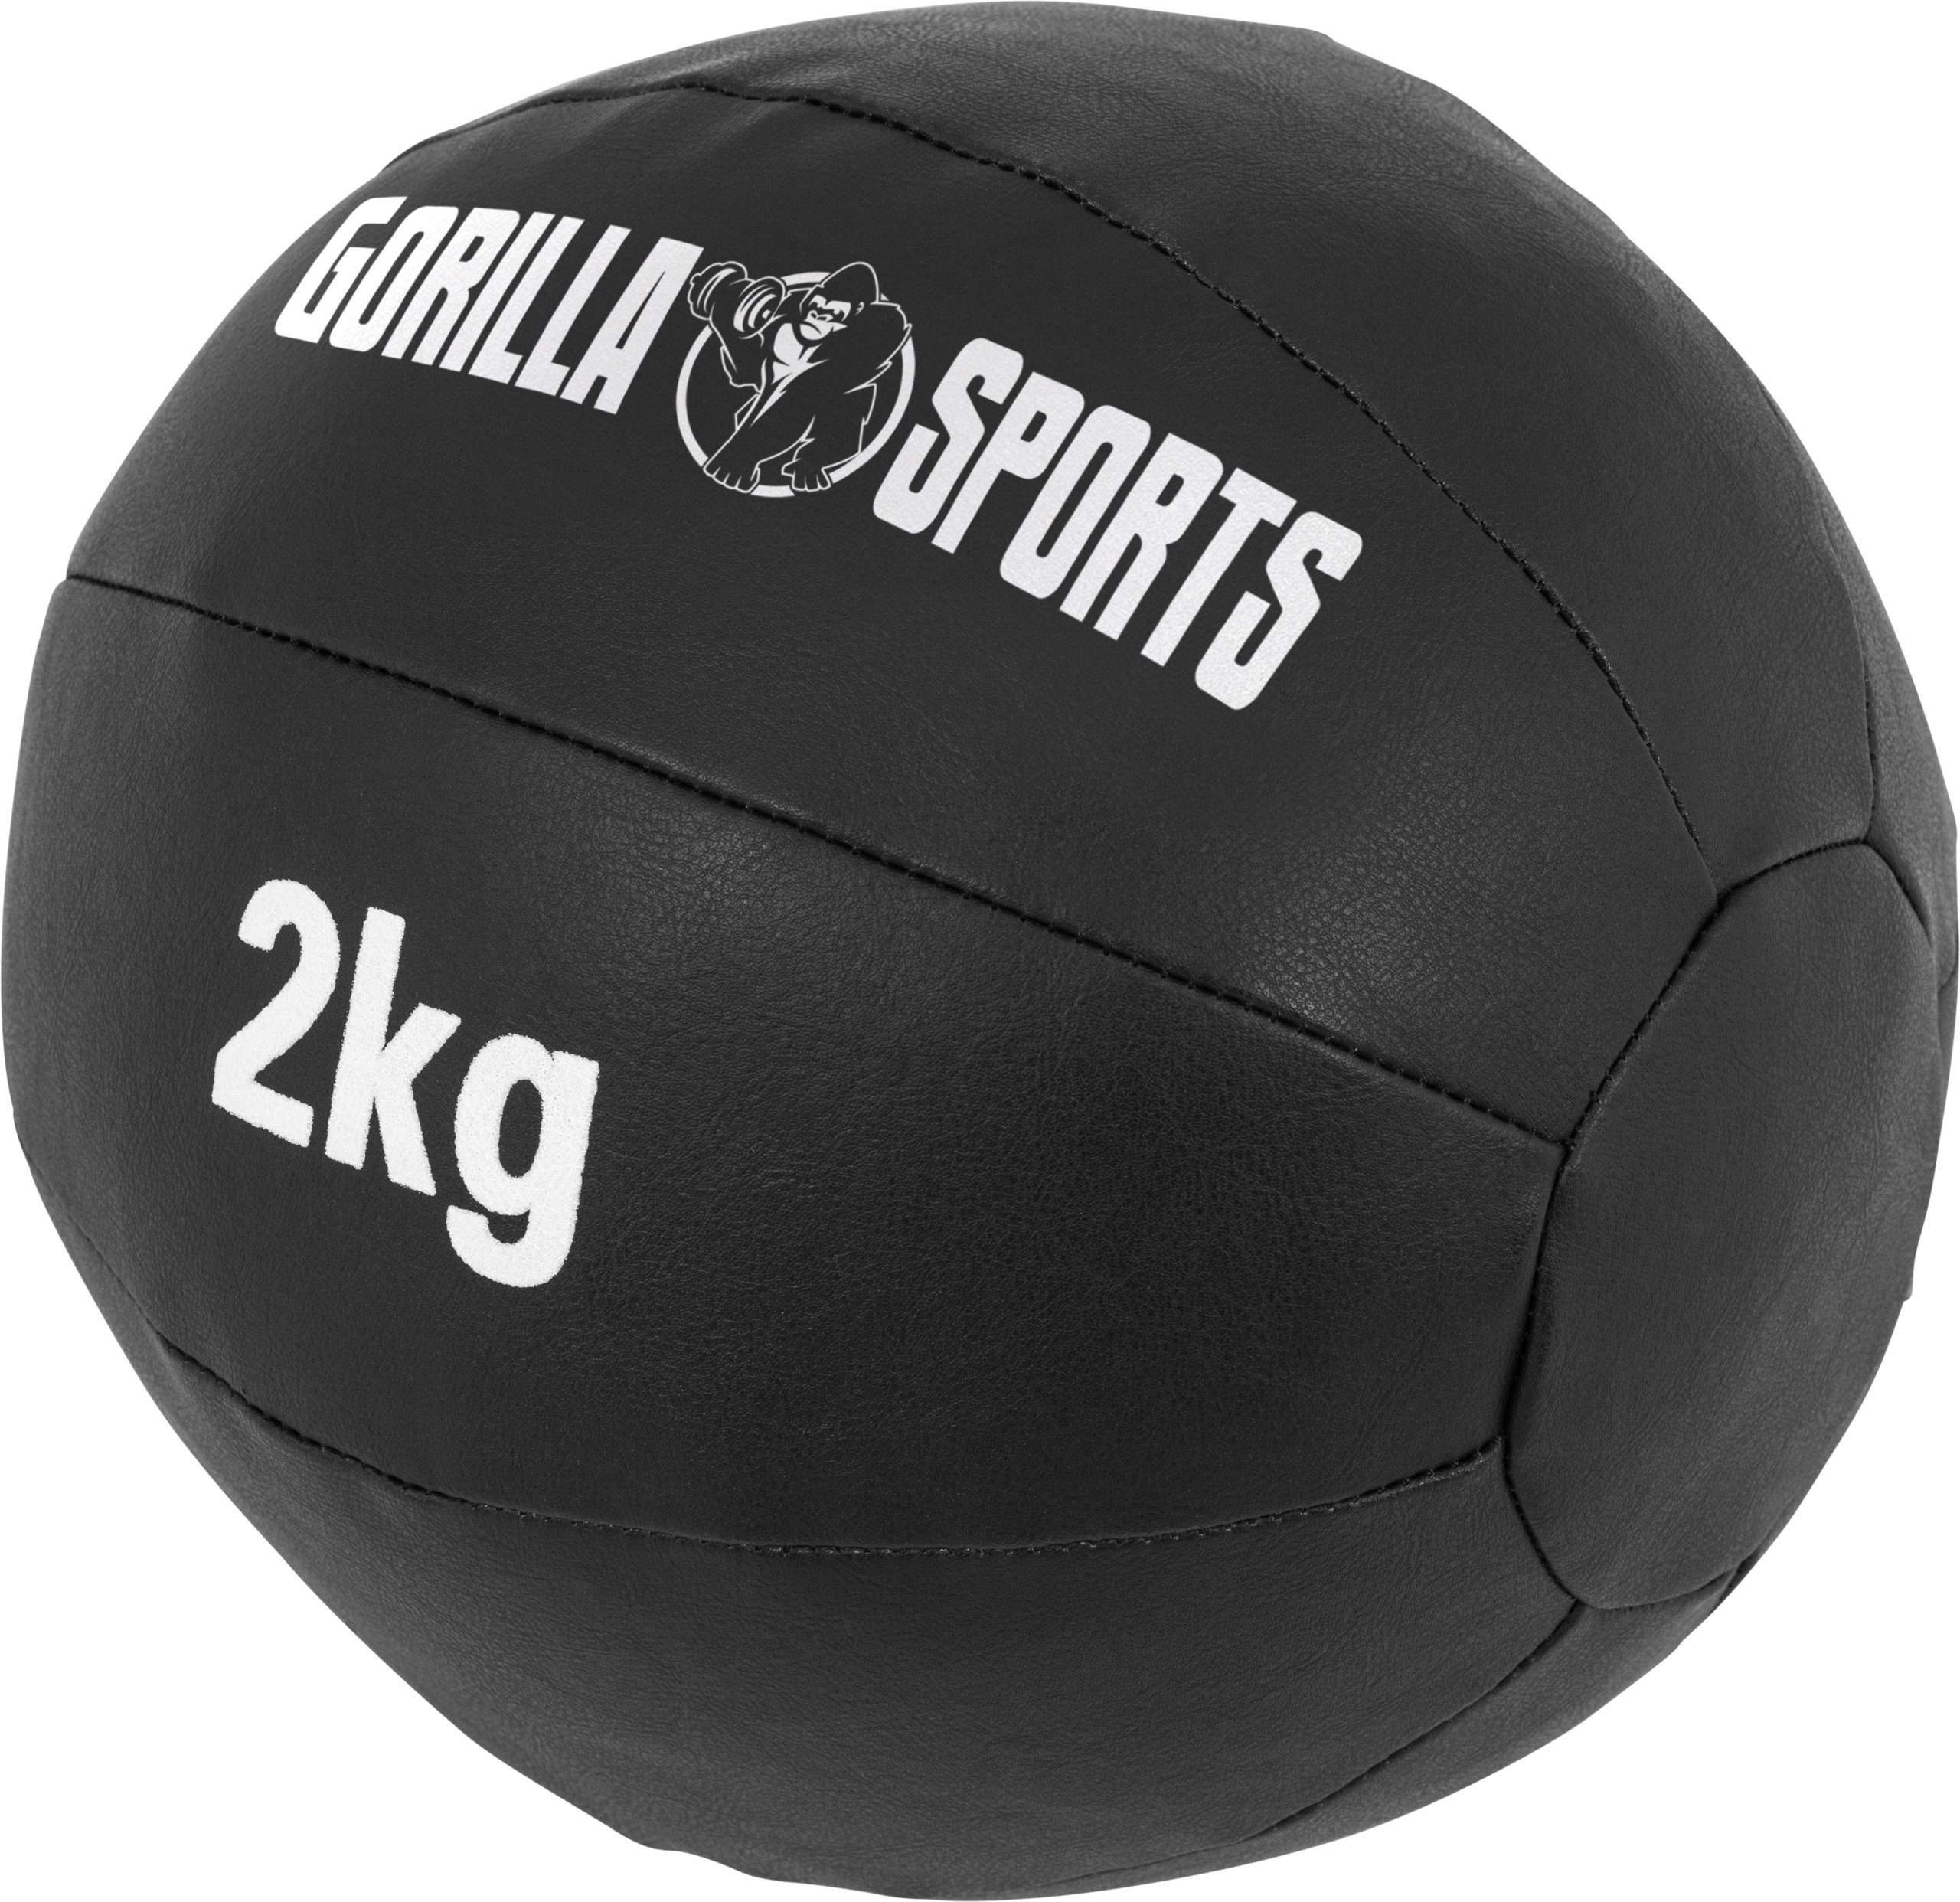 kg 29cm, SPORTS Einzeln/Set, Fitnessball, aus 2 Leder, Gewichtsball Trainingsball, Medizinball GORILLA